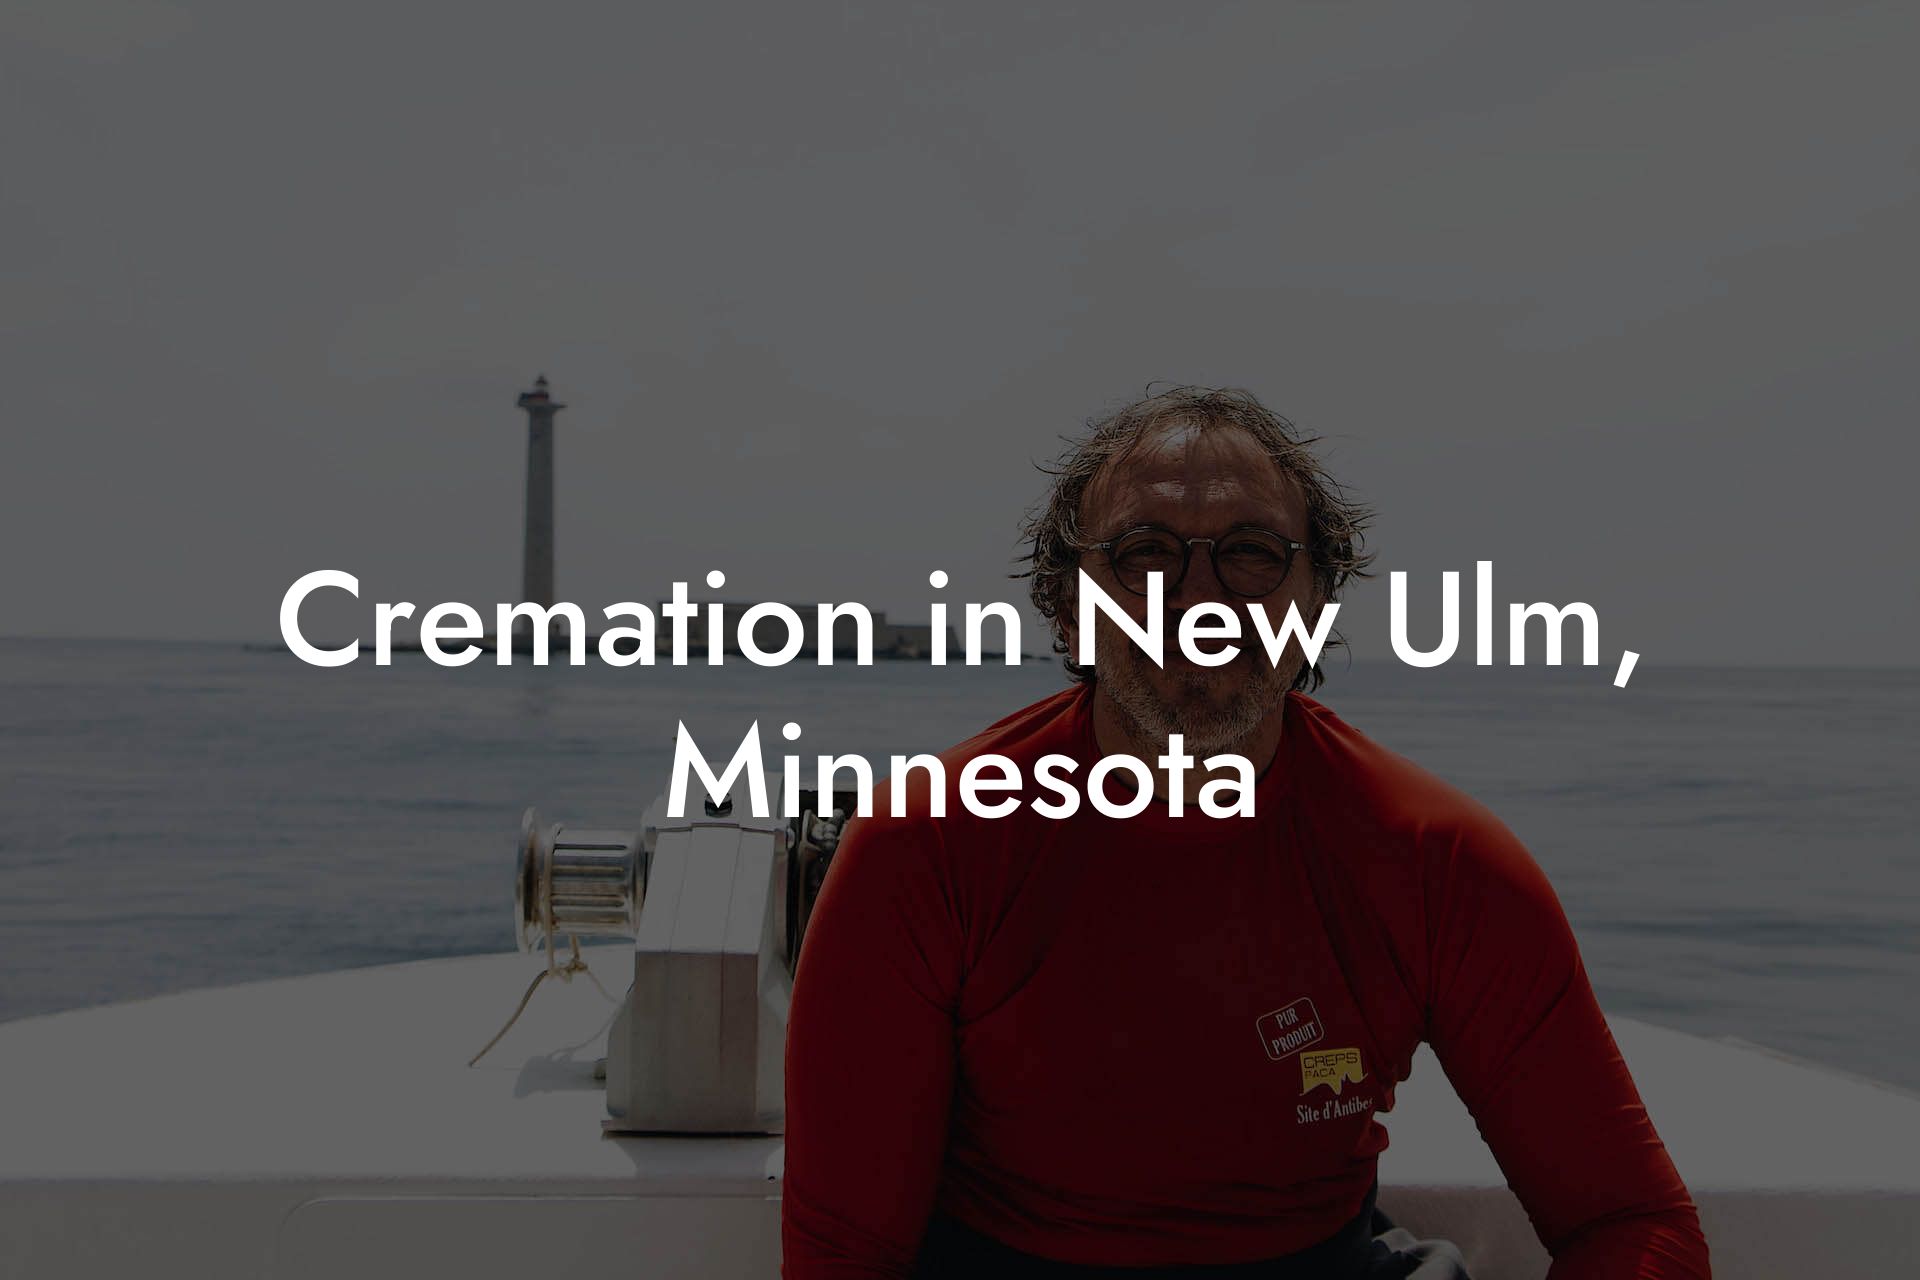 Cremation in New Ulm, Minnesota